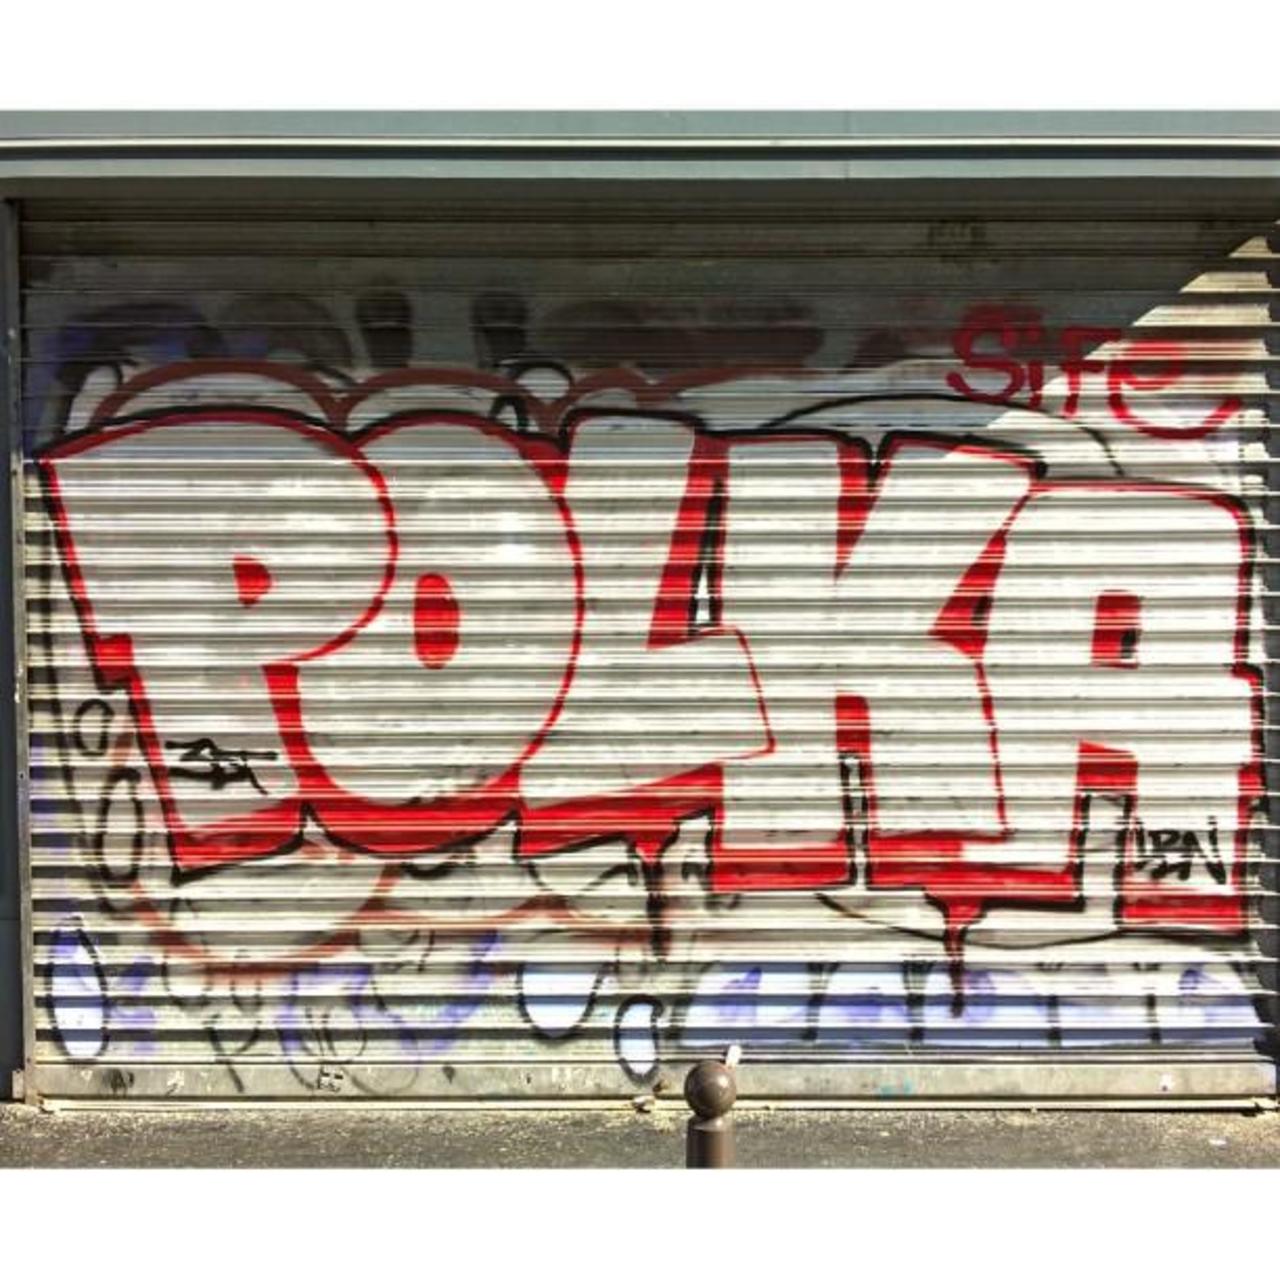 #Paris #graffiti photo by @maxdimontemarciano http://ift.tt/1iUtX2K #StreetArt http://t.co/NvMIsDALNk